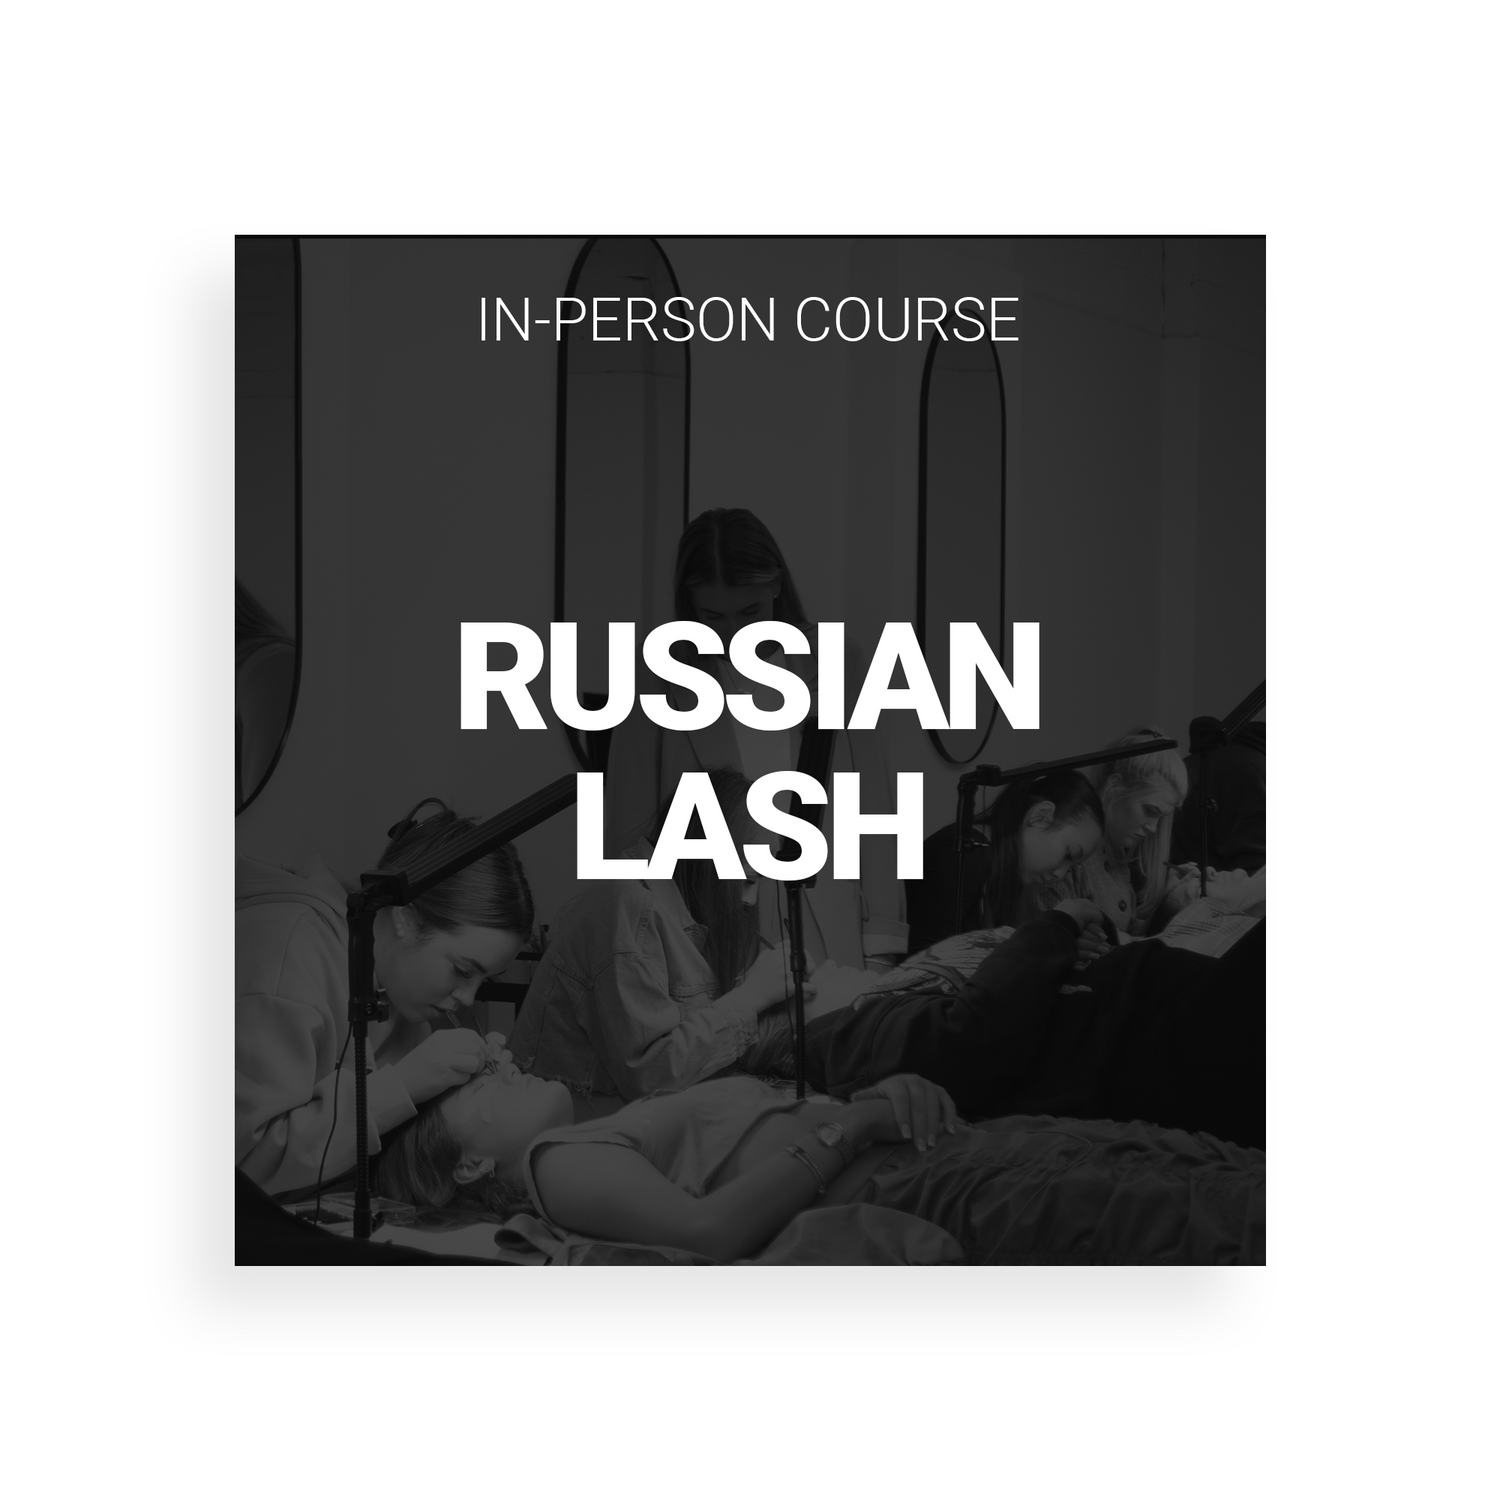 RUSSIAN LASH